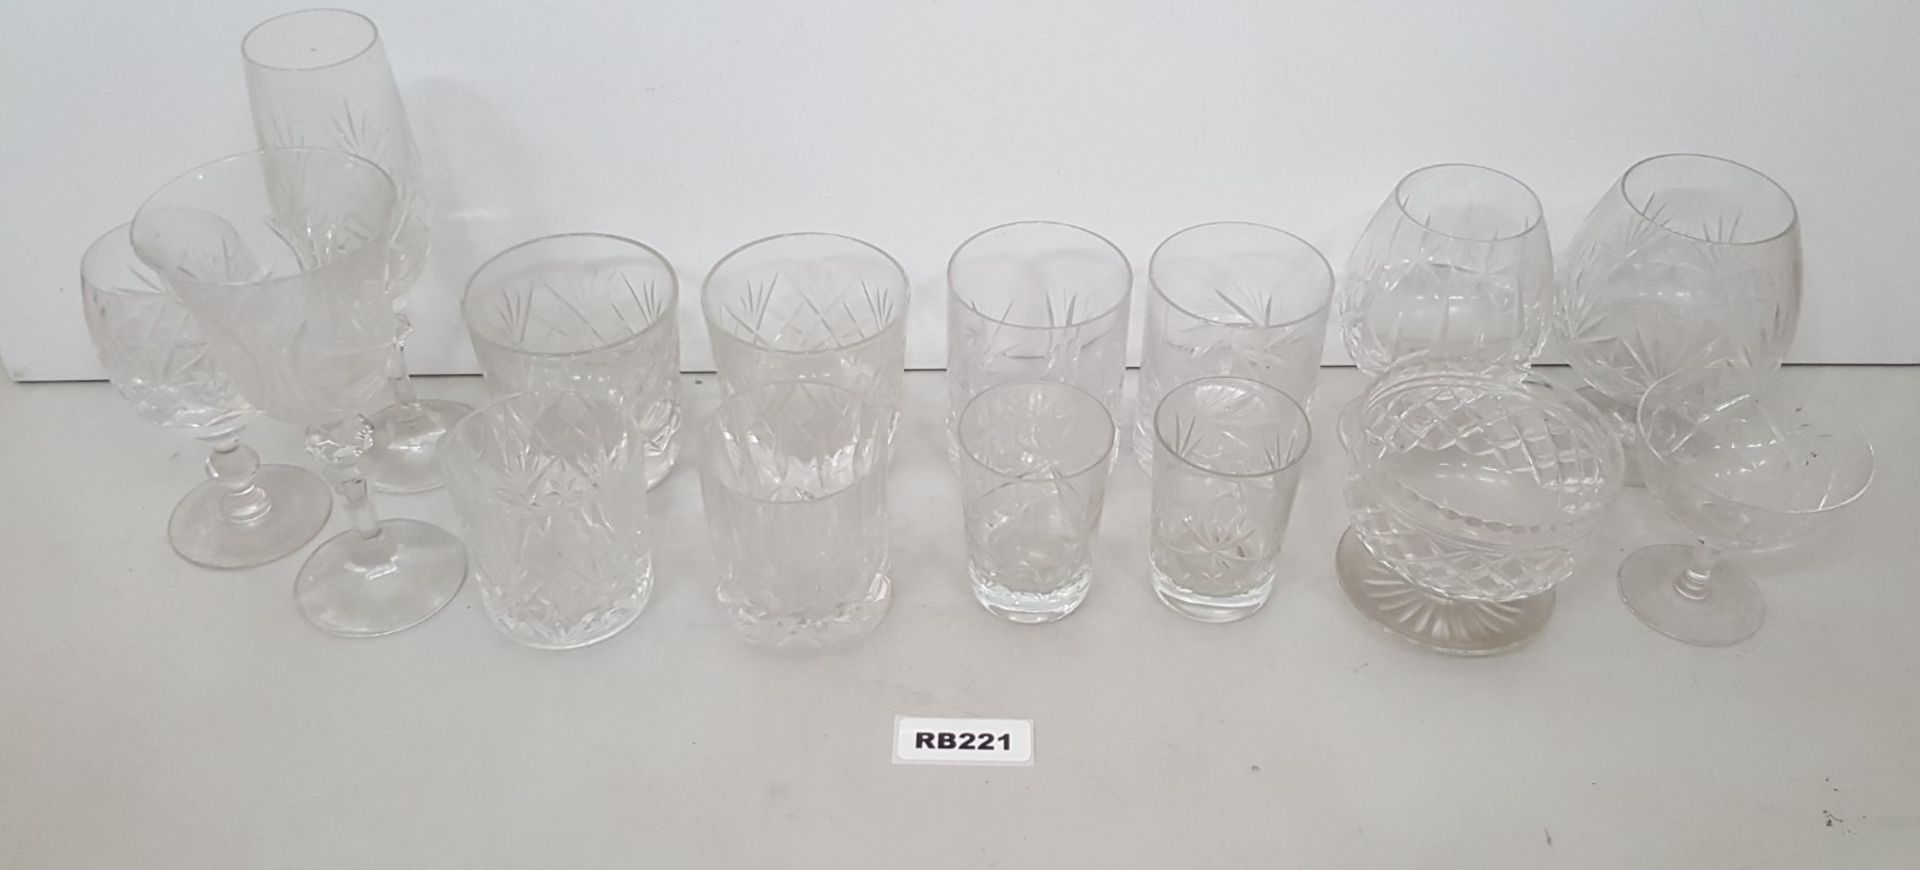 15 x Vintage Cut Glass Drinking Glasses - Ref RB221 I